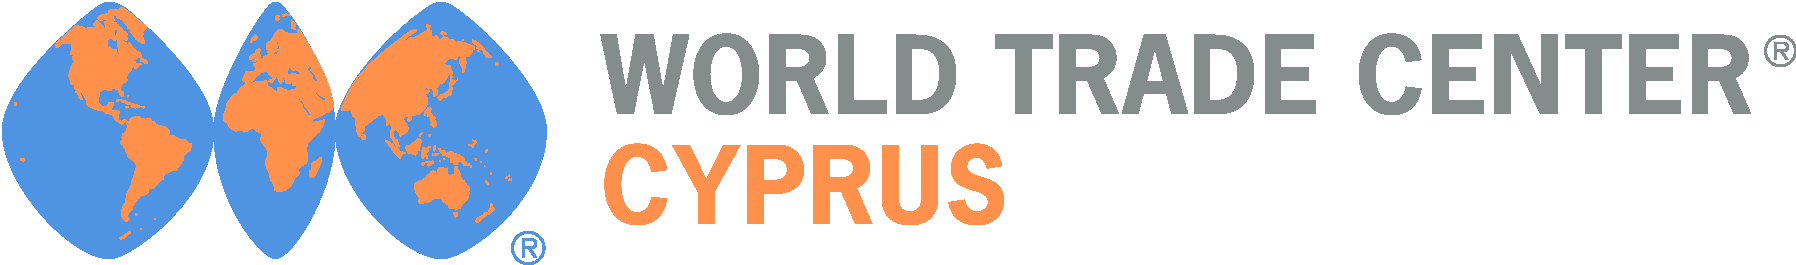 WTC Cyprus logo